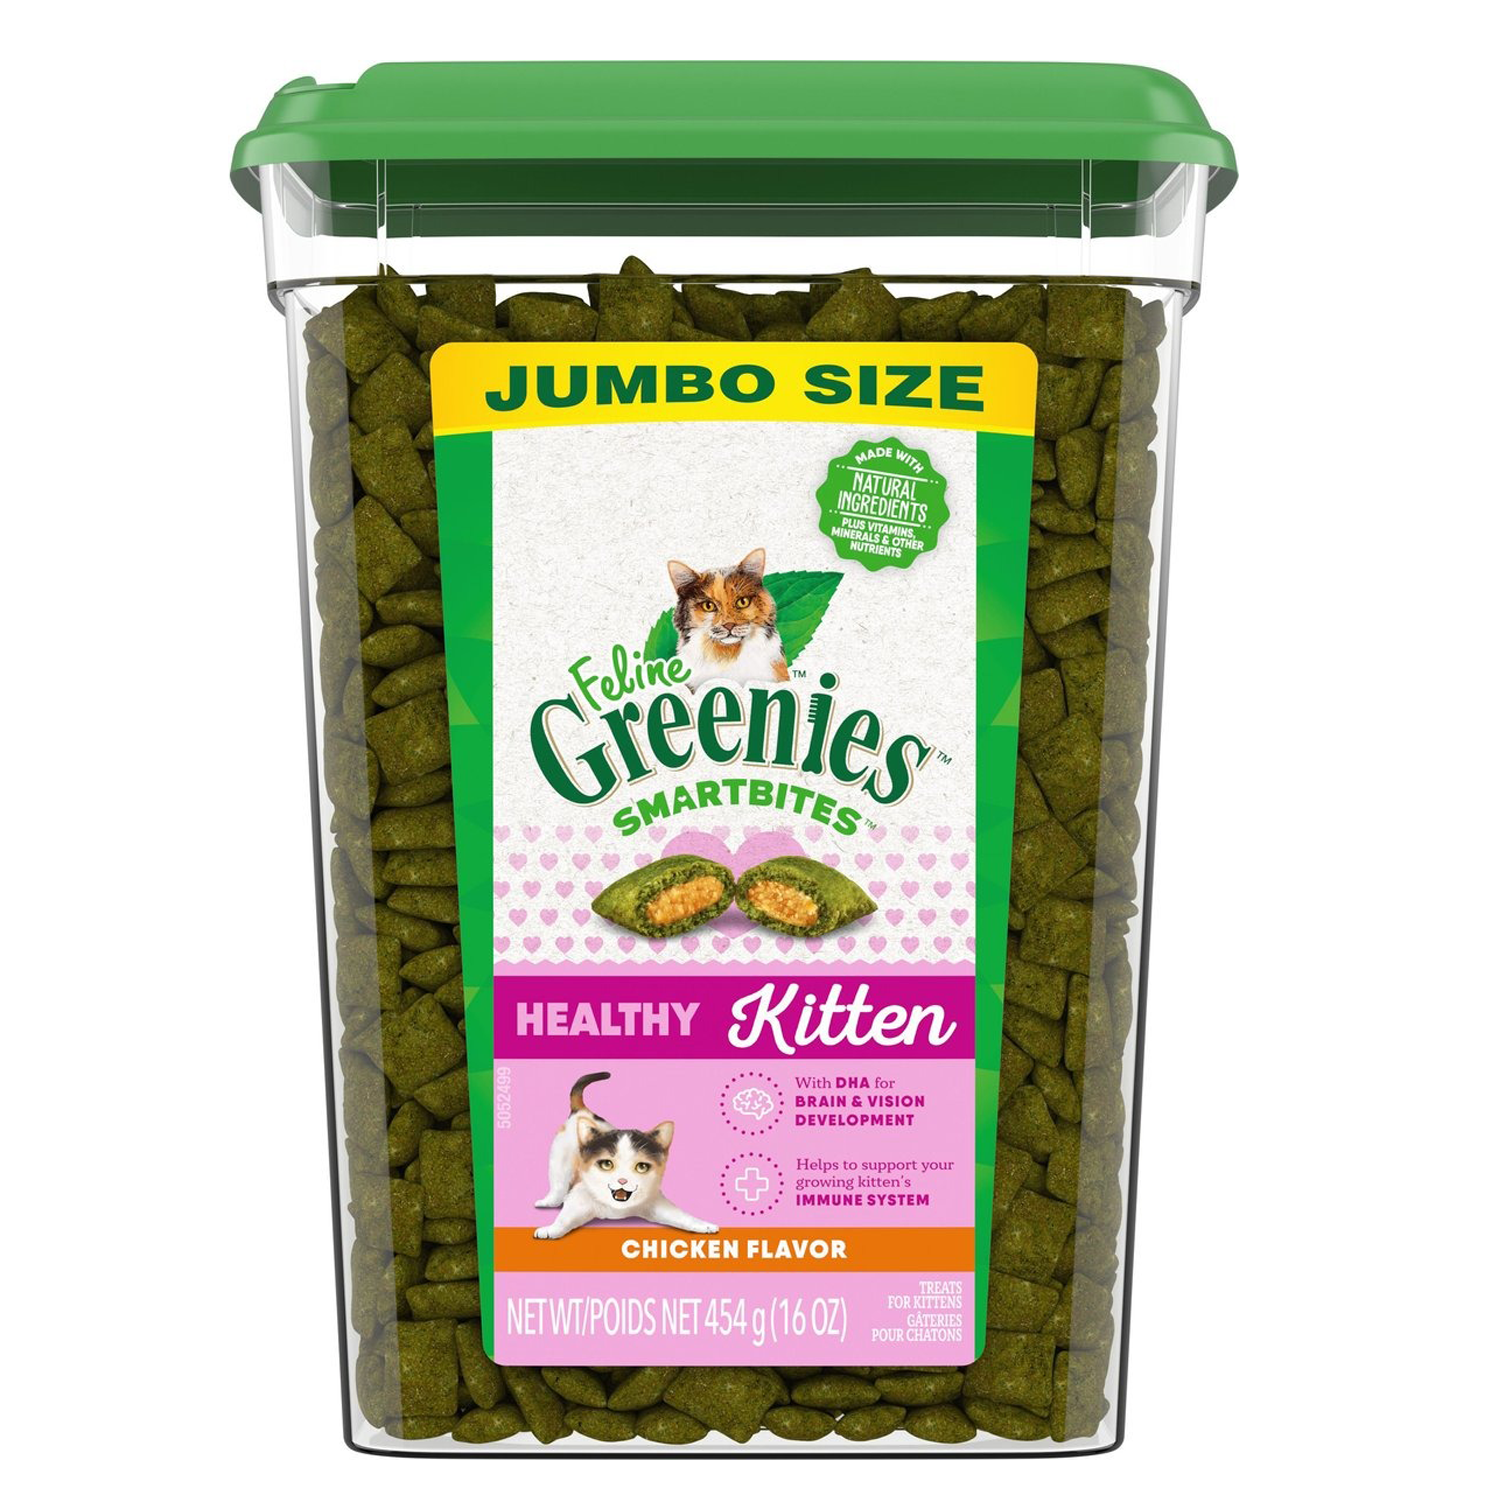 Greenies SmartBites Kitten Chicken Flavor Cat Crunchy Treat